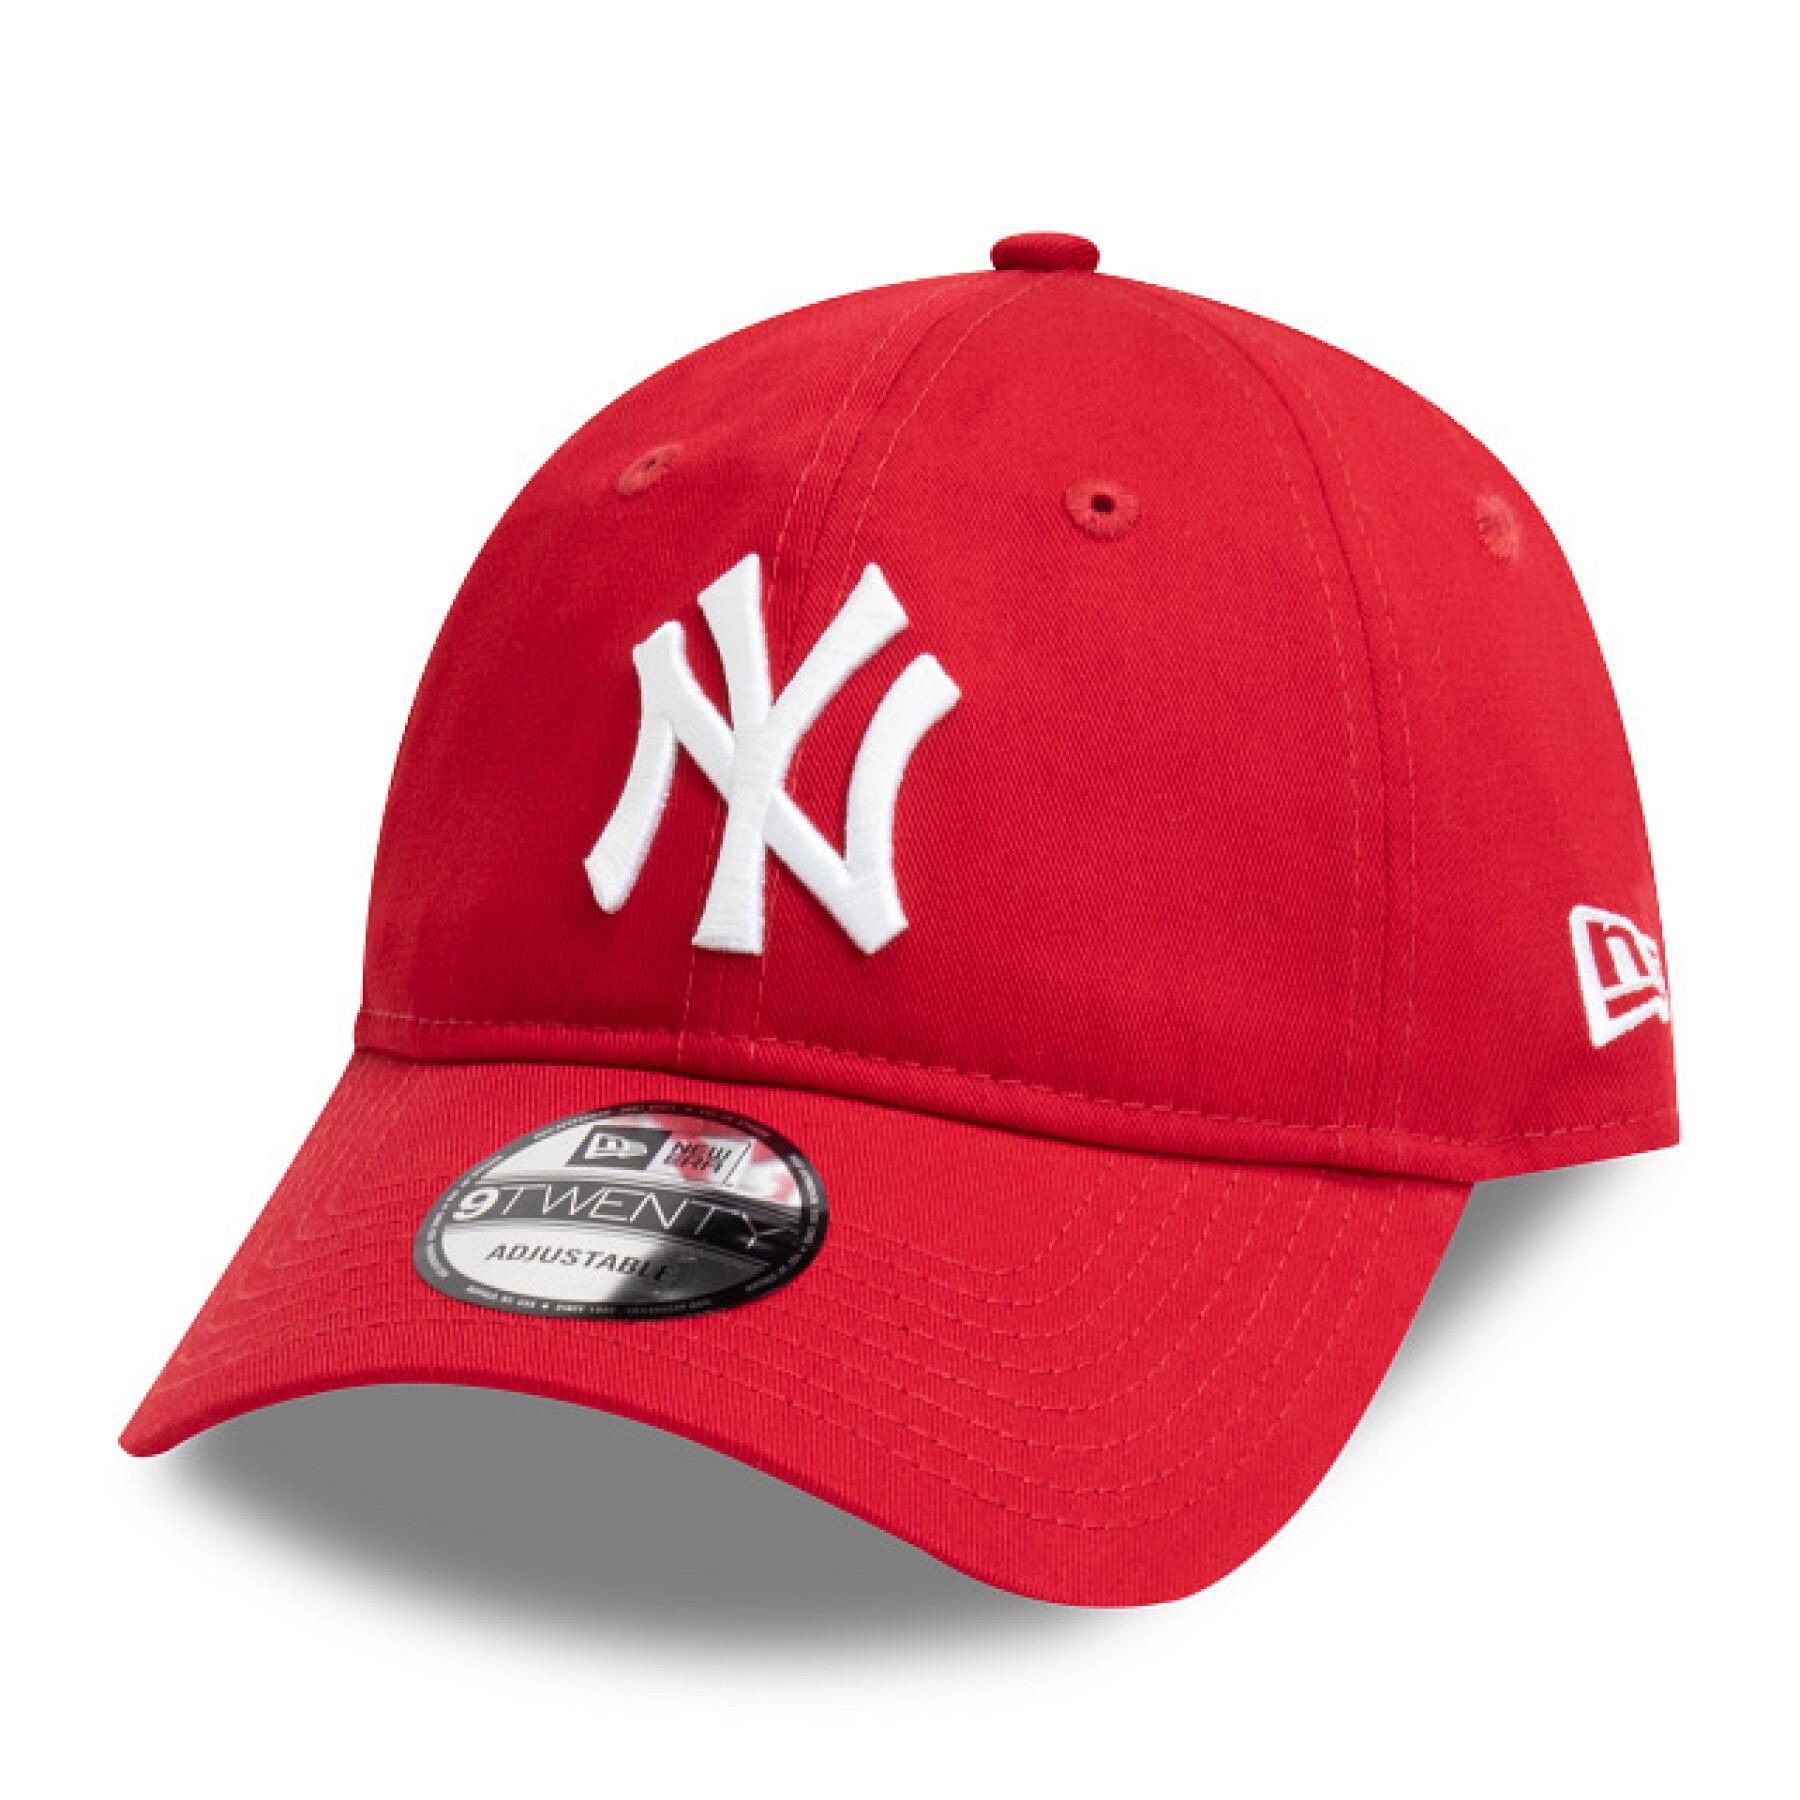 Cap New York Yankees Ess 9TWENTY